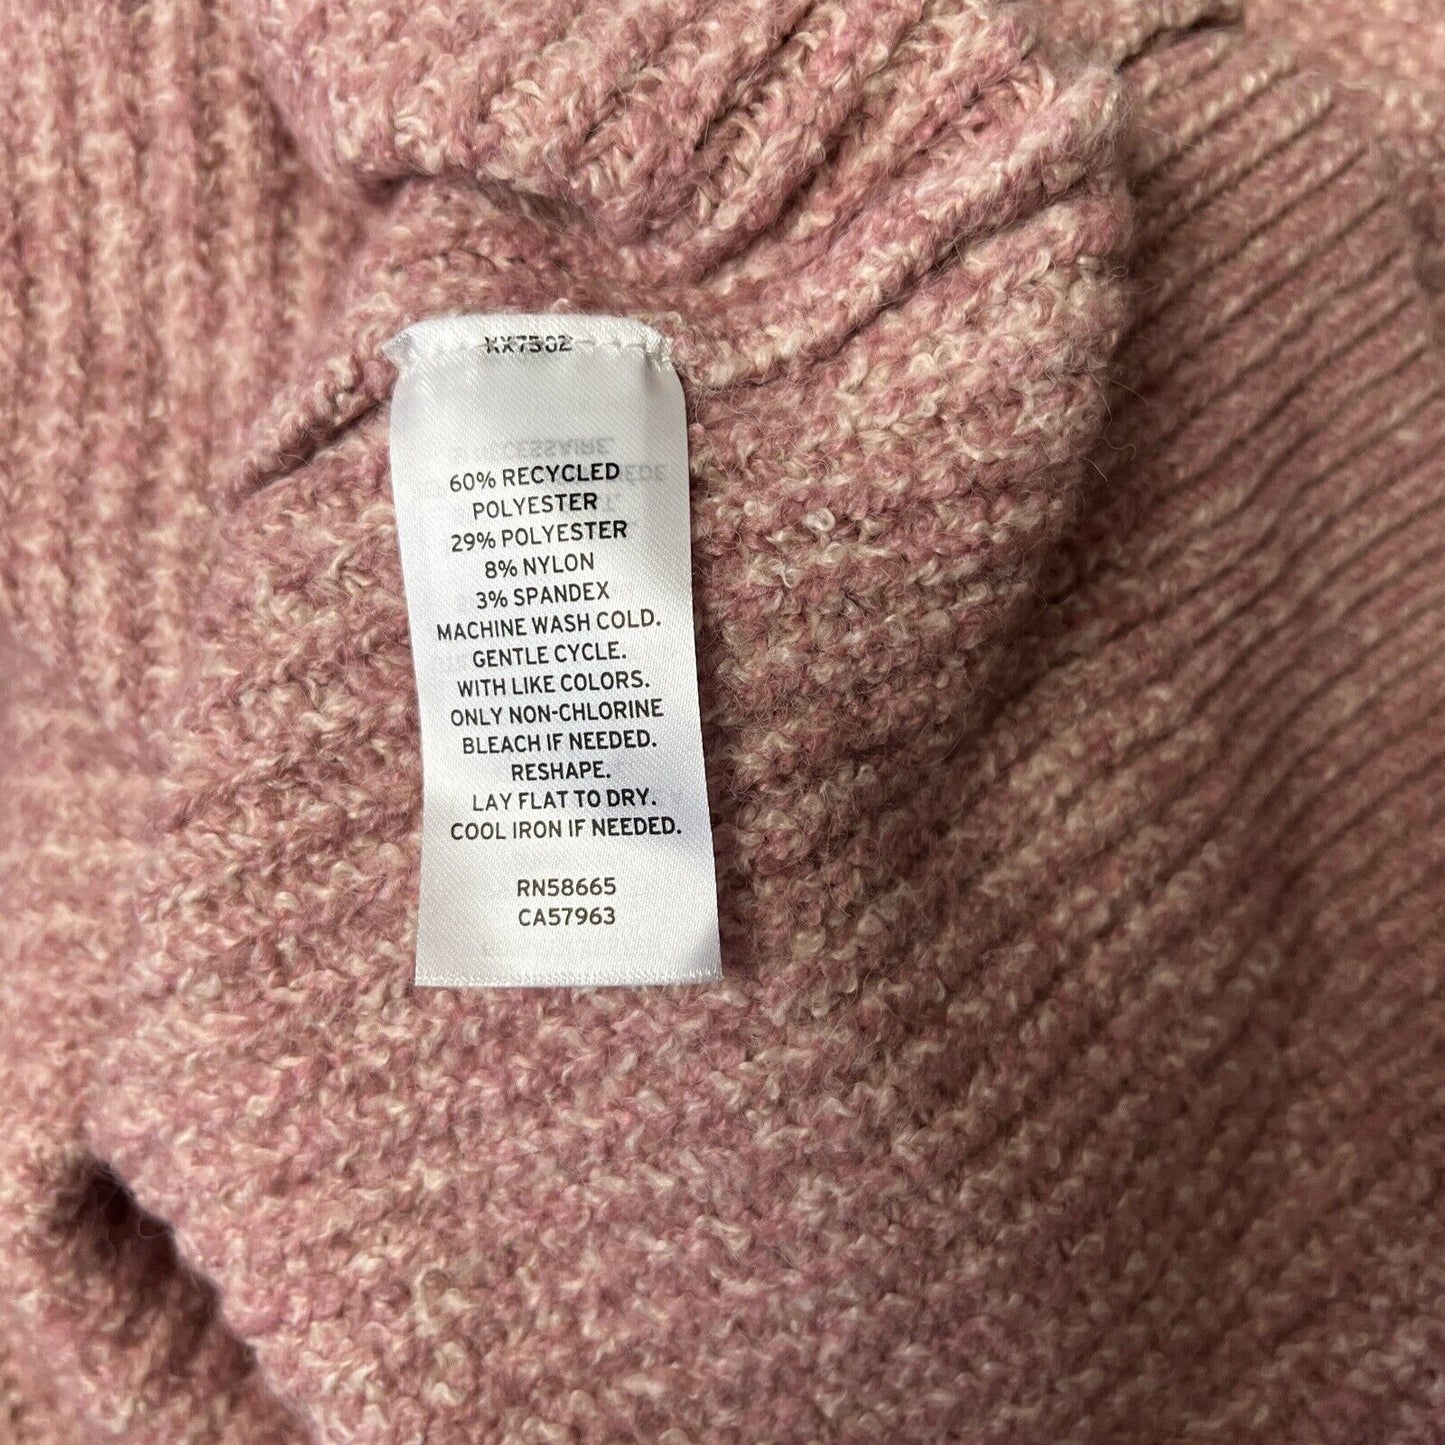 BP Nordstrom Plaited Stitch Recycled Blend Crewneck Sweater Size Medium Pink